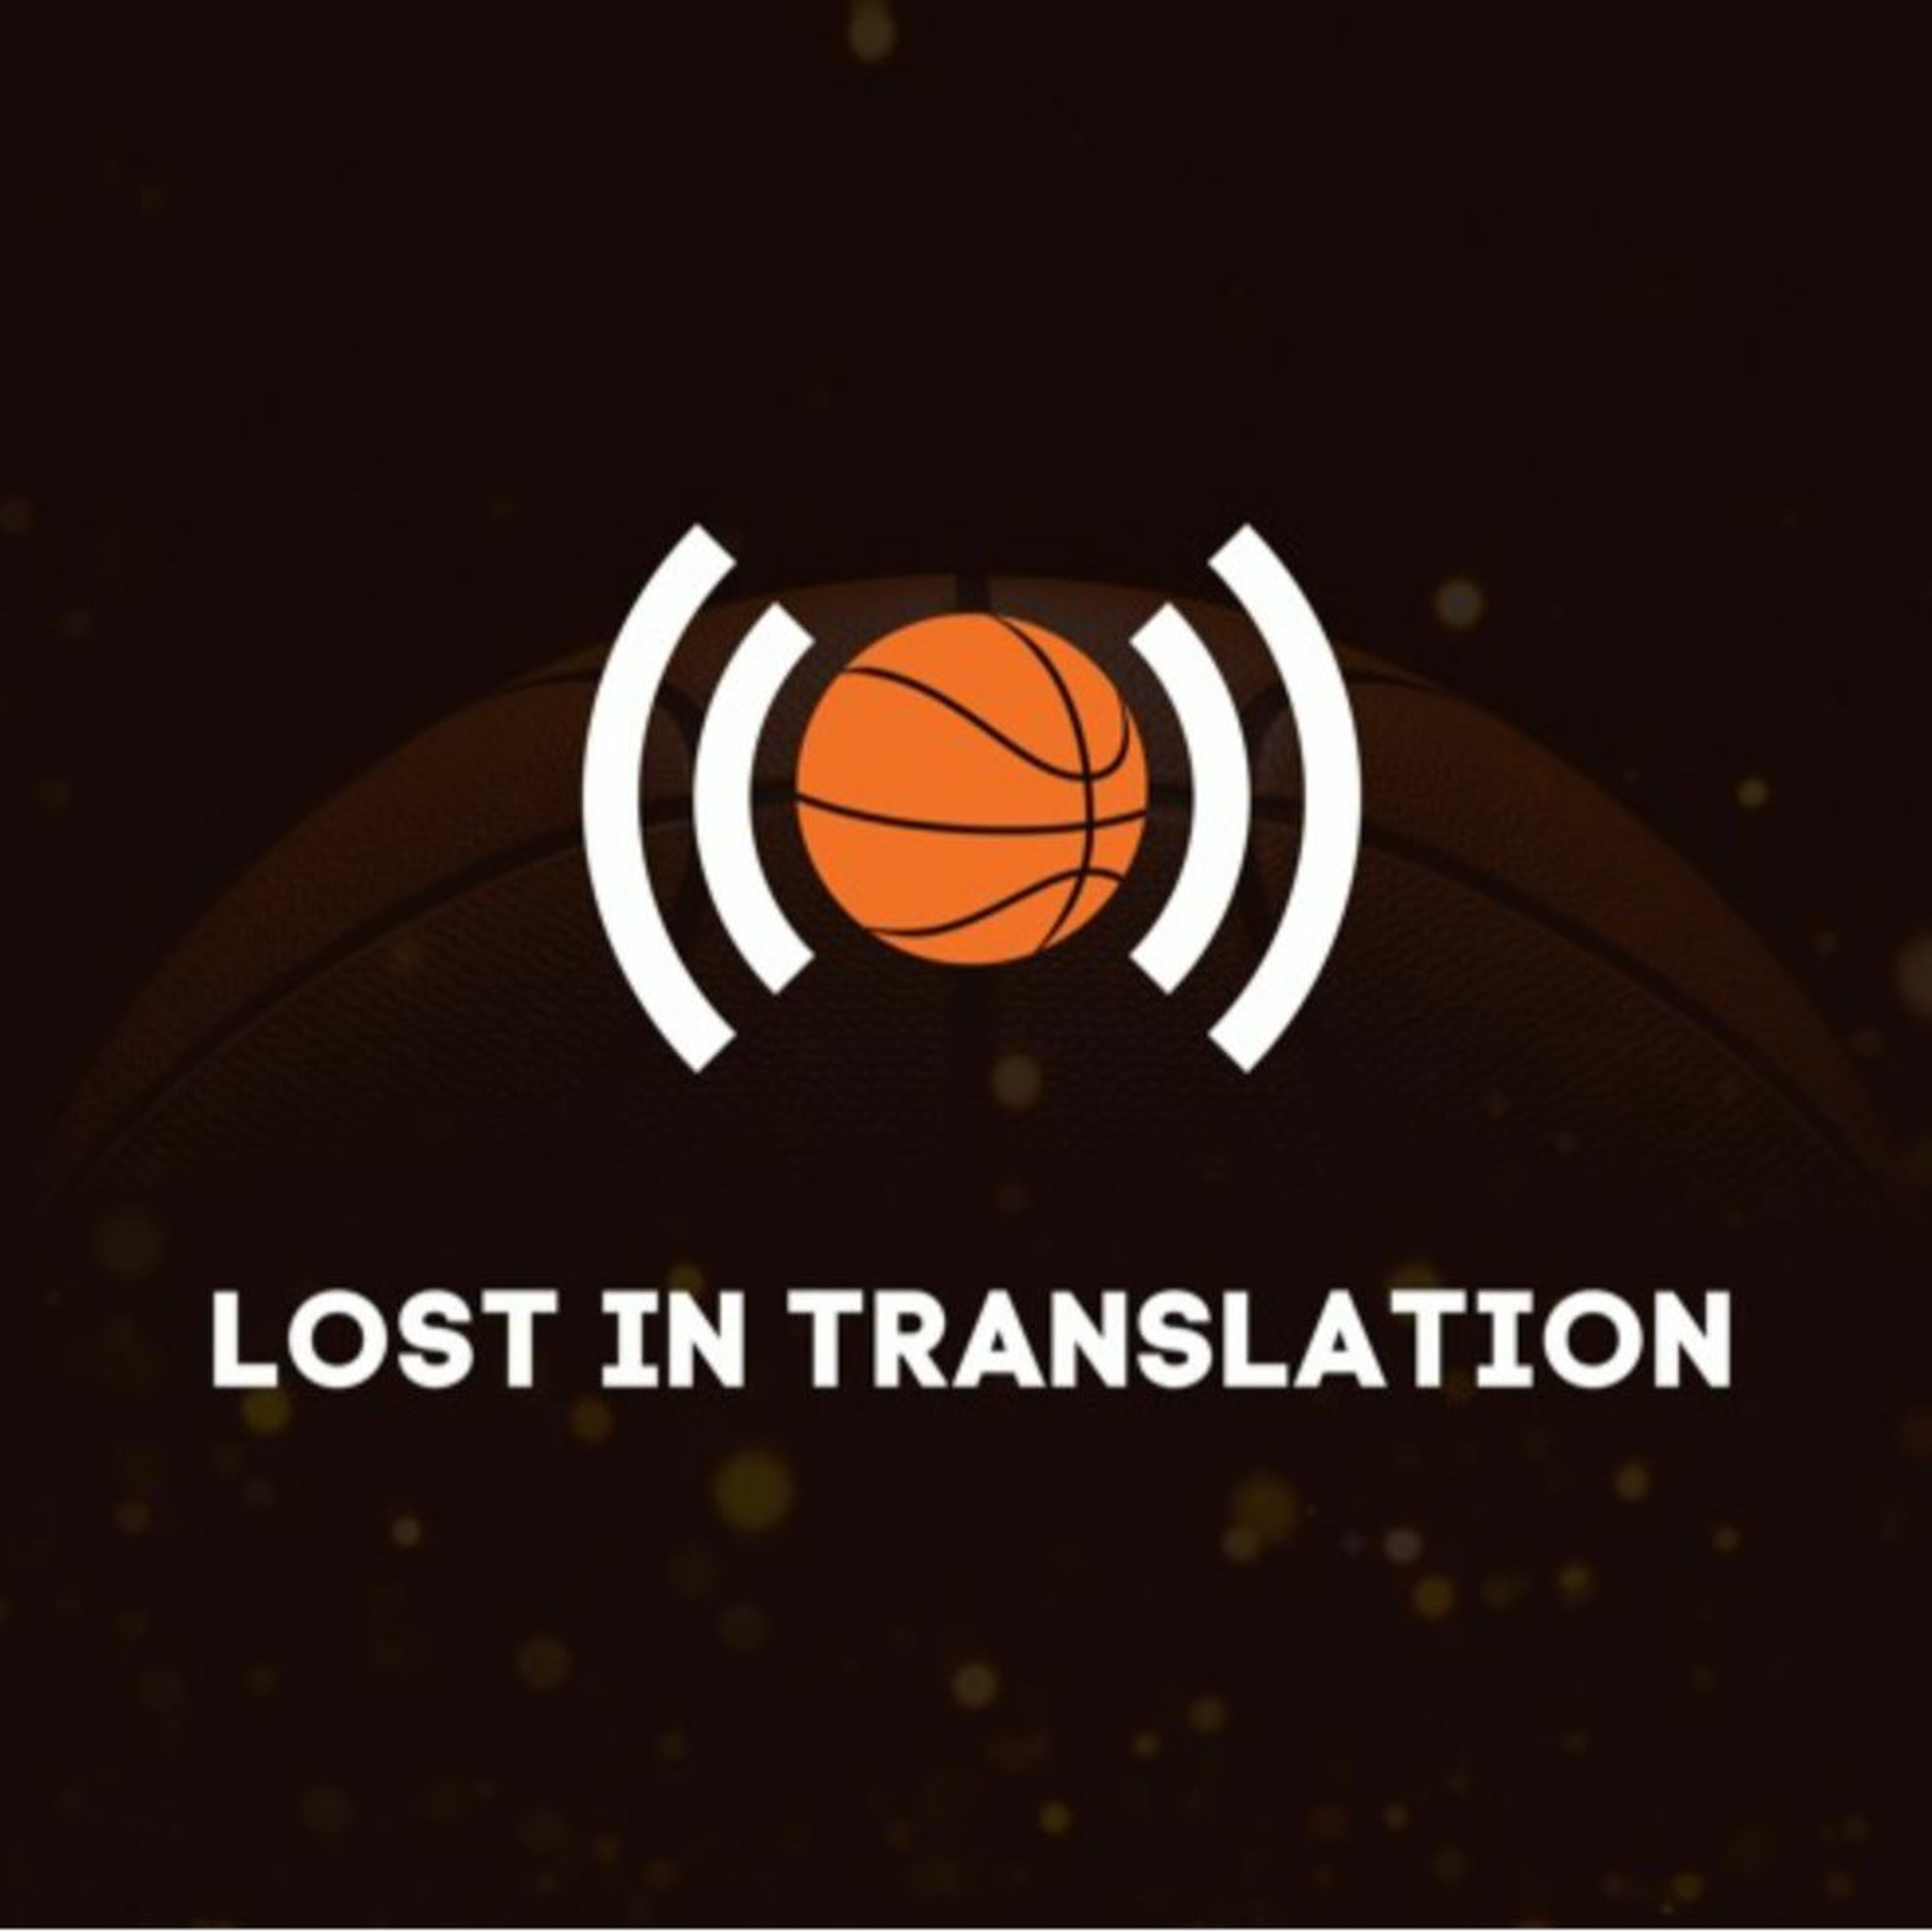 Lost in Translation Episode 32 Part 1 - LIT on the Road with BU men’s basketball’s Joe Jones